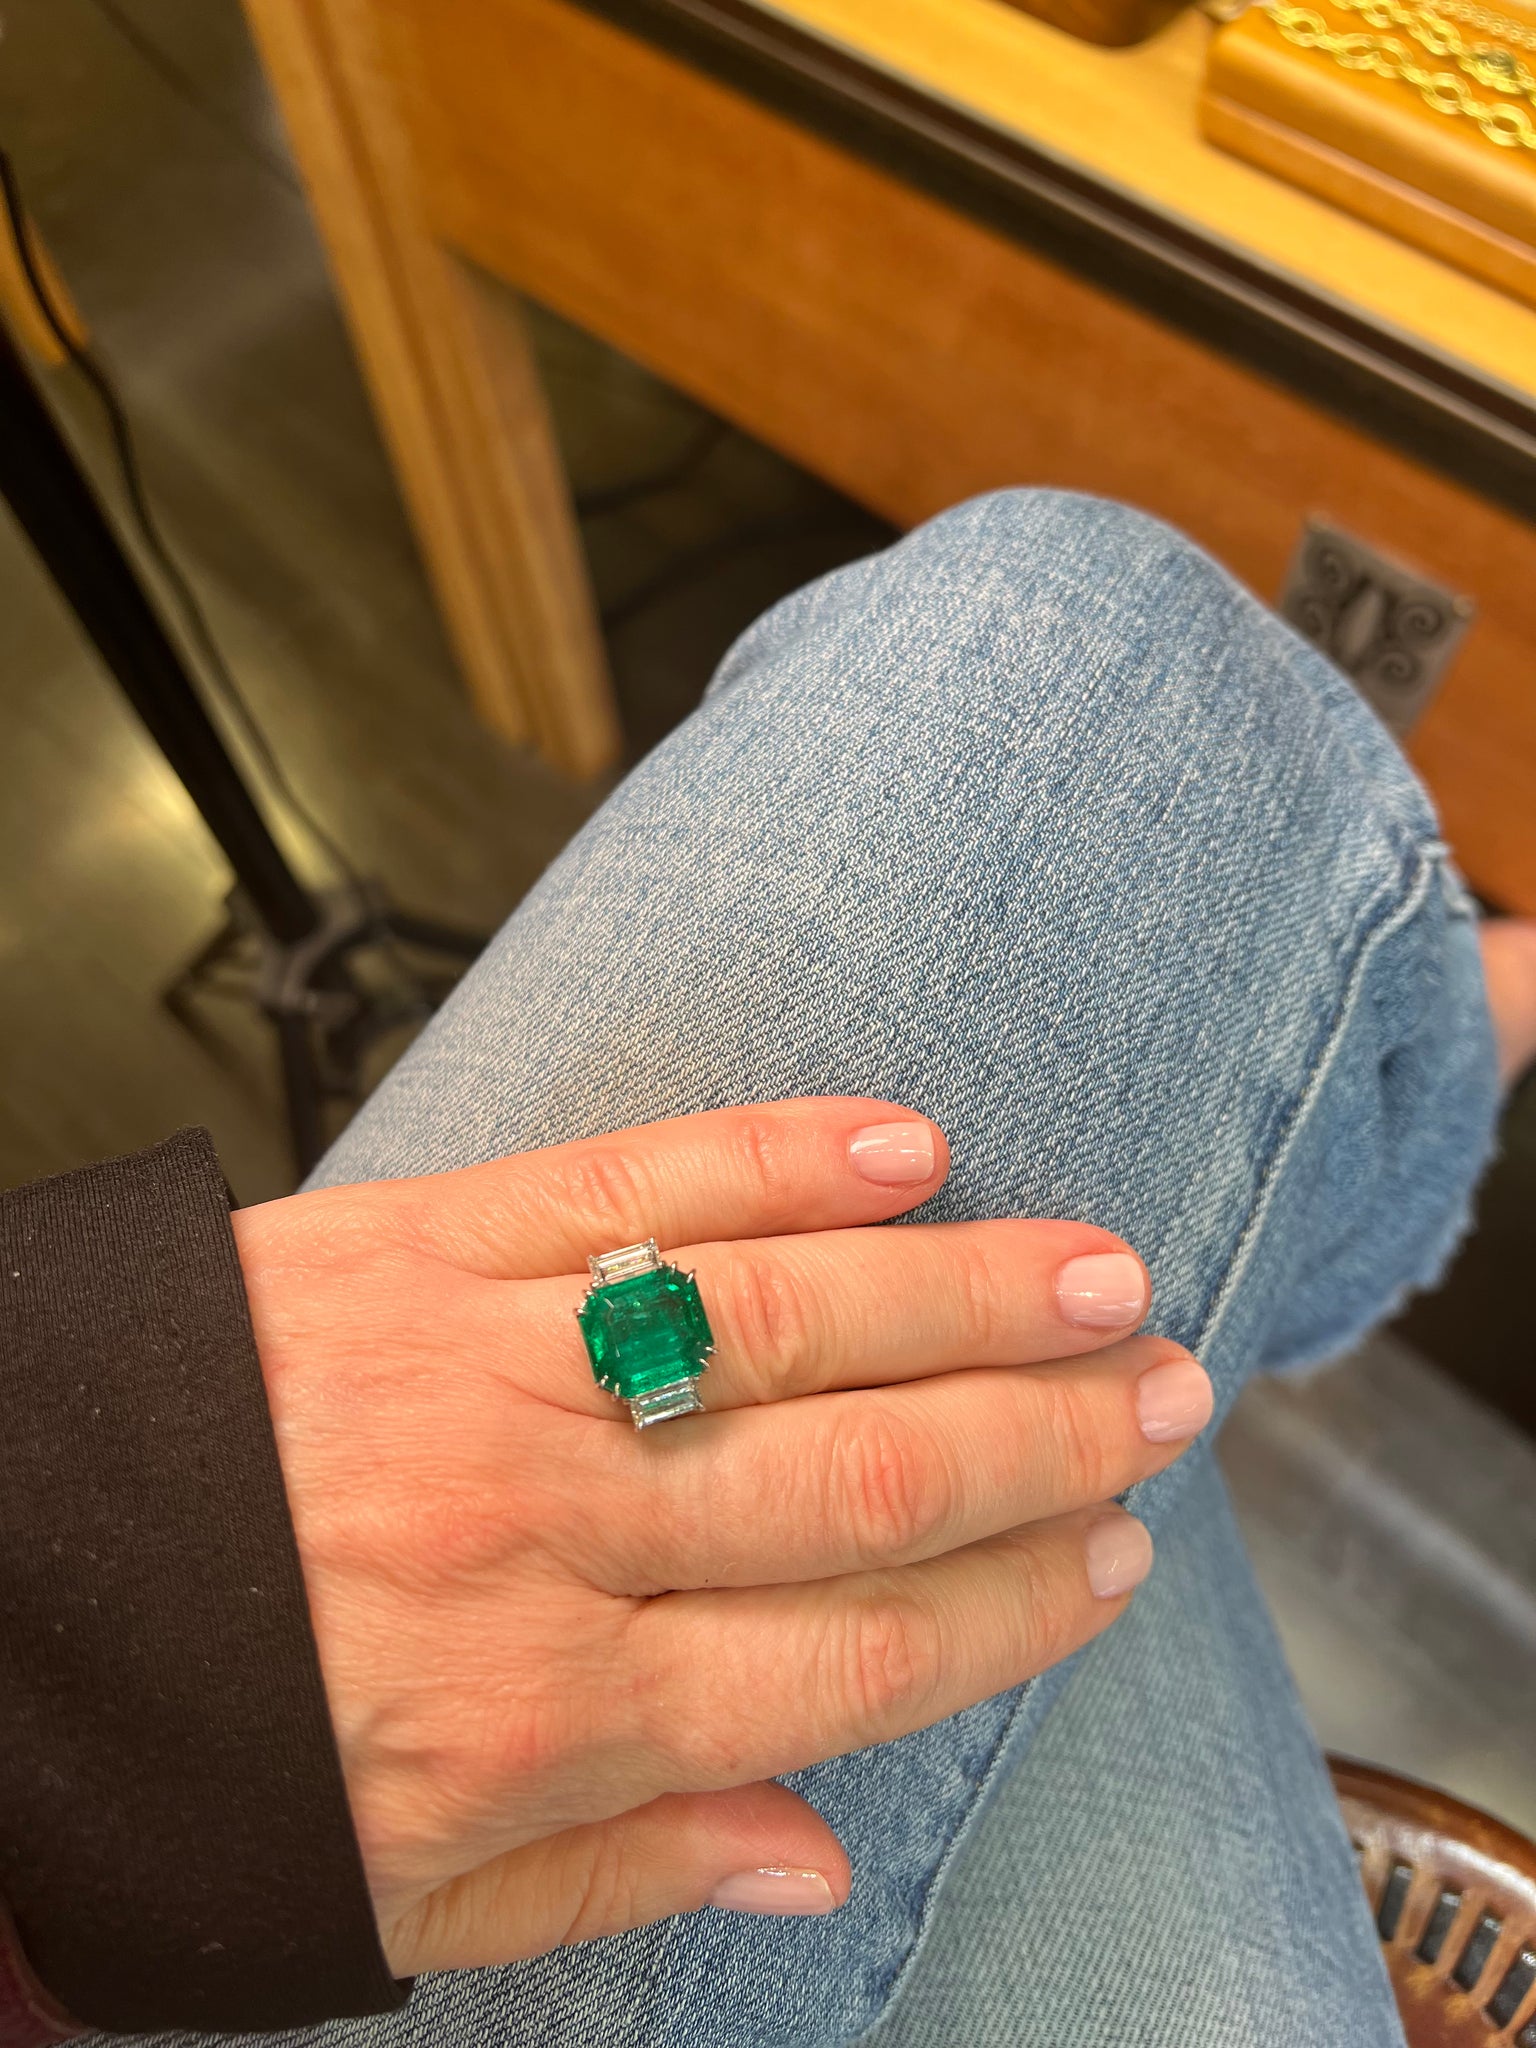 7.85 carat Colombian Emerald Minor Ring